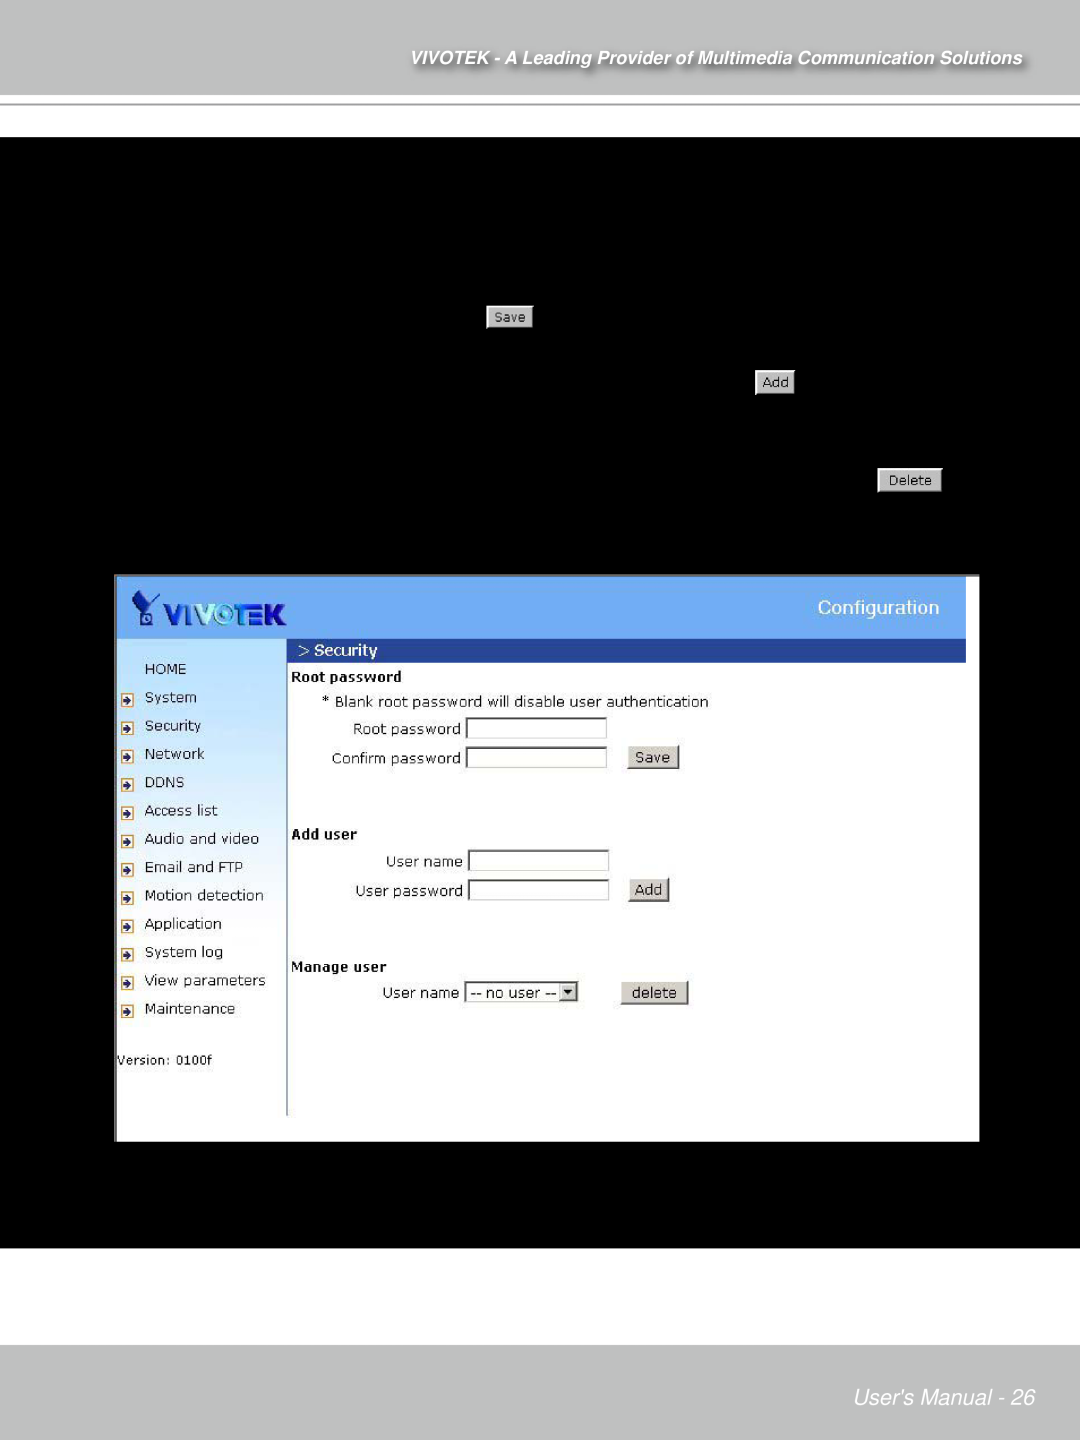 Vivotek IP7132 manual Security settings, Users Manual 